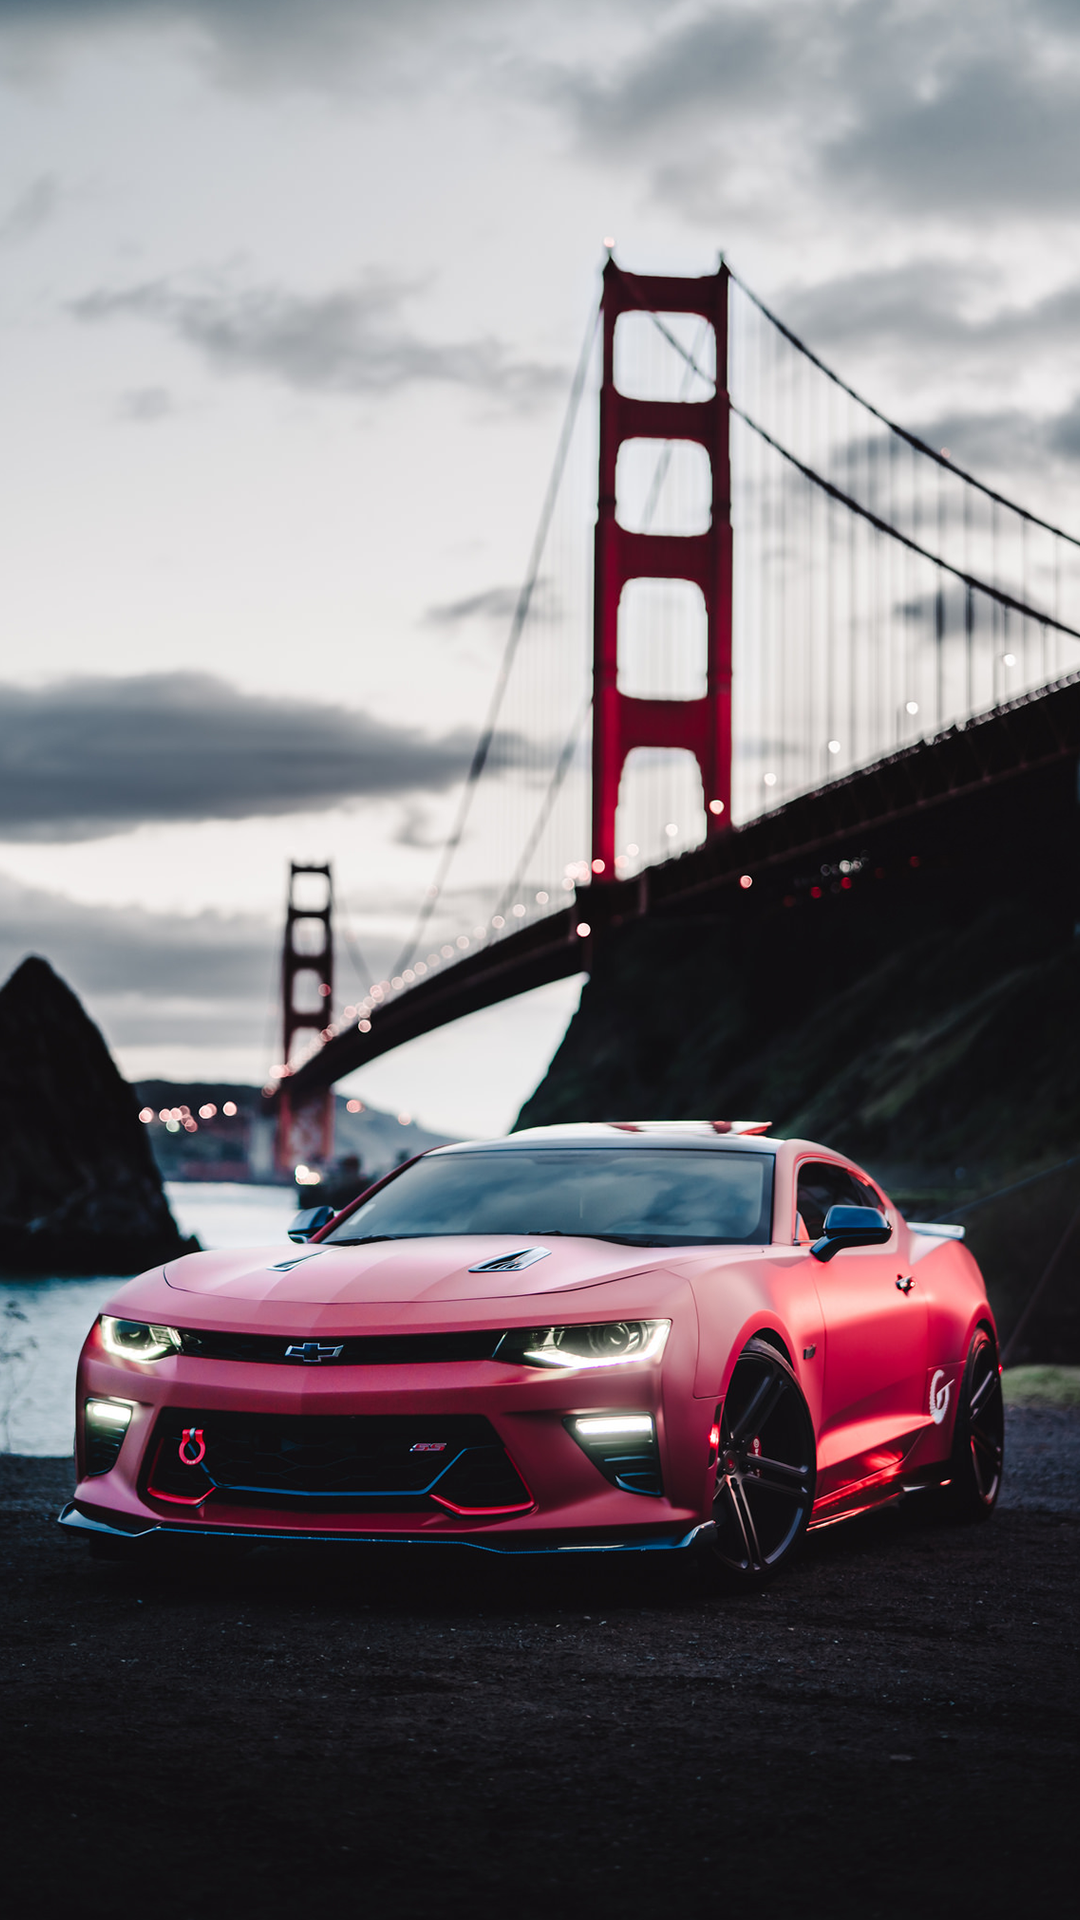 General 1080x1920 car vehicle Golden Gate Bridge USA Chevrolet Camaro SS suspension bridge red cars portrait display